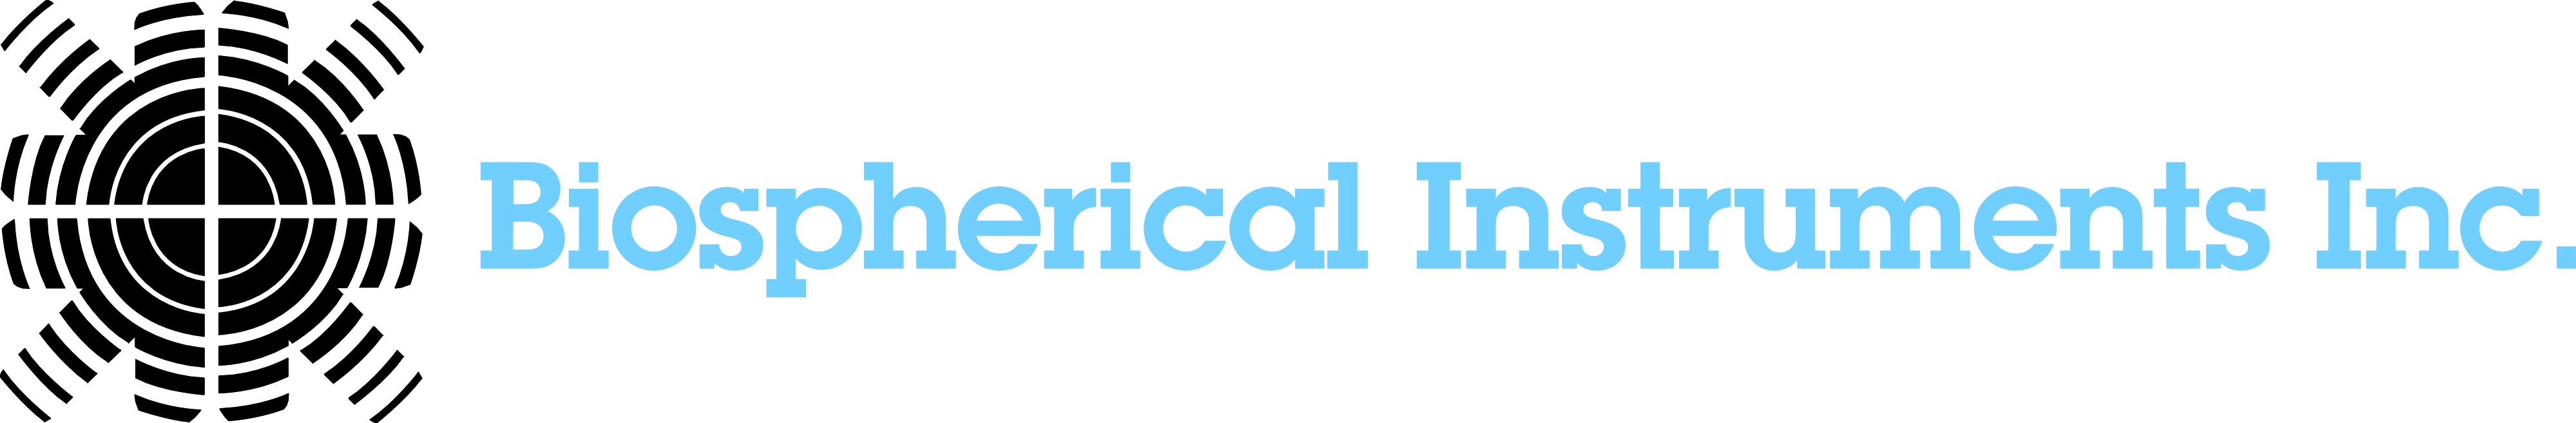 Biospherical Instruments Inc Logo